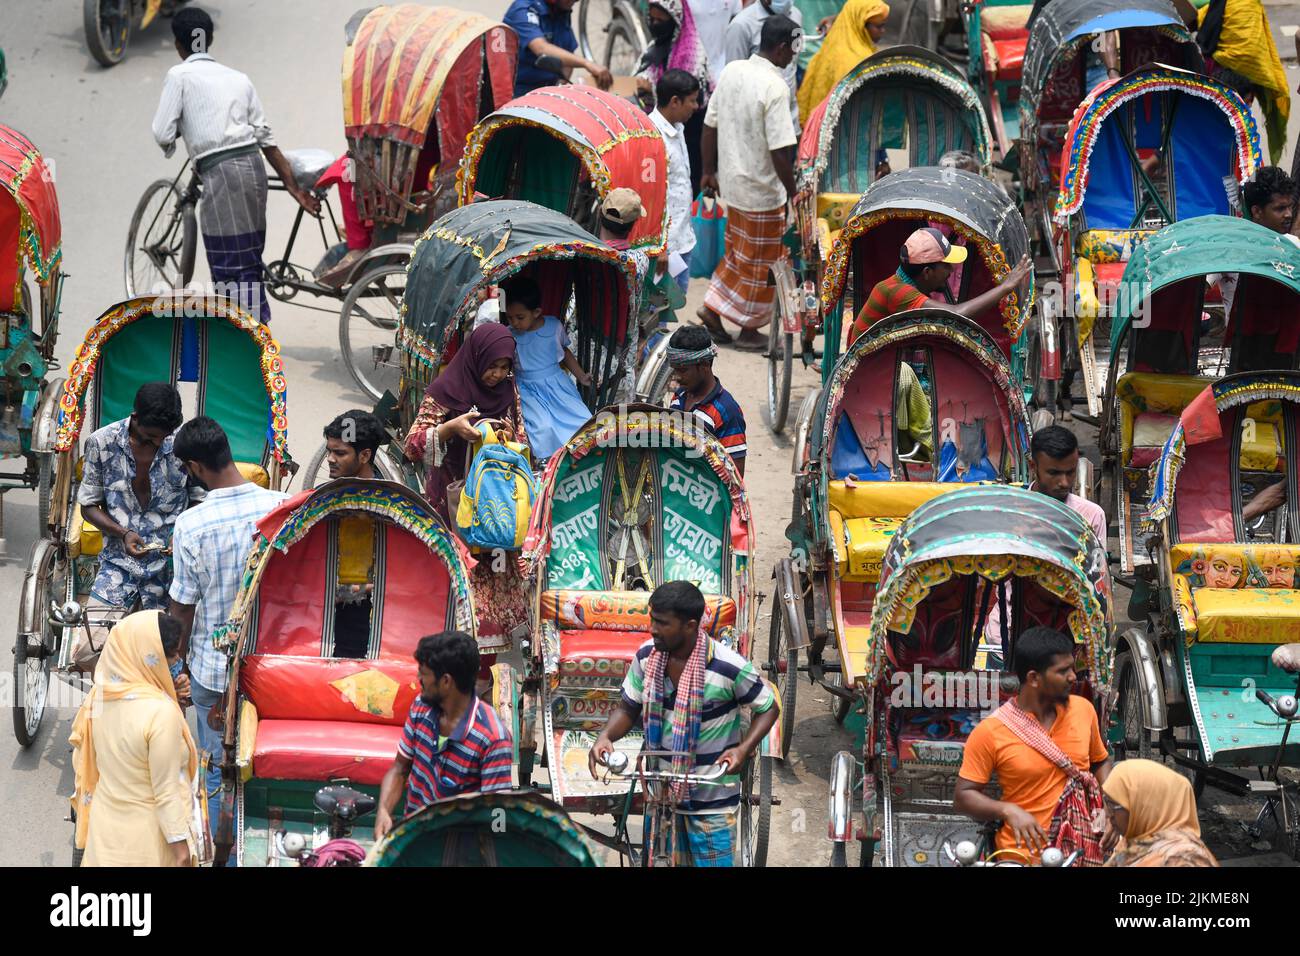 rickshaw-pullers-seen-waiting-for-customers-on-the-streets-of-dhaka-bangladesh-2JKME8N.jpg